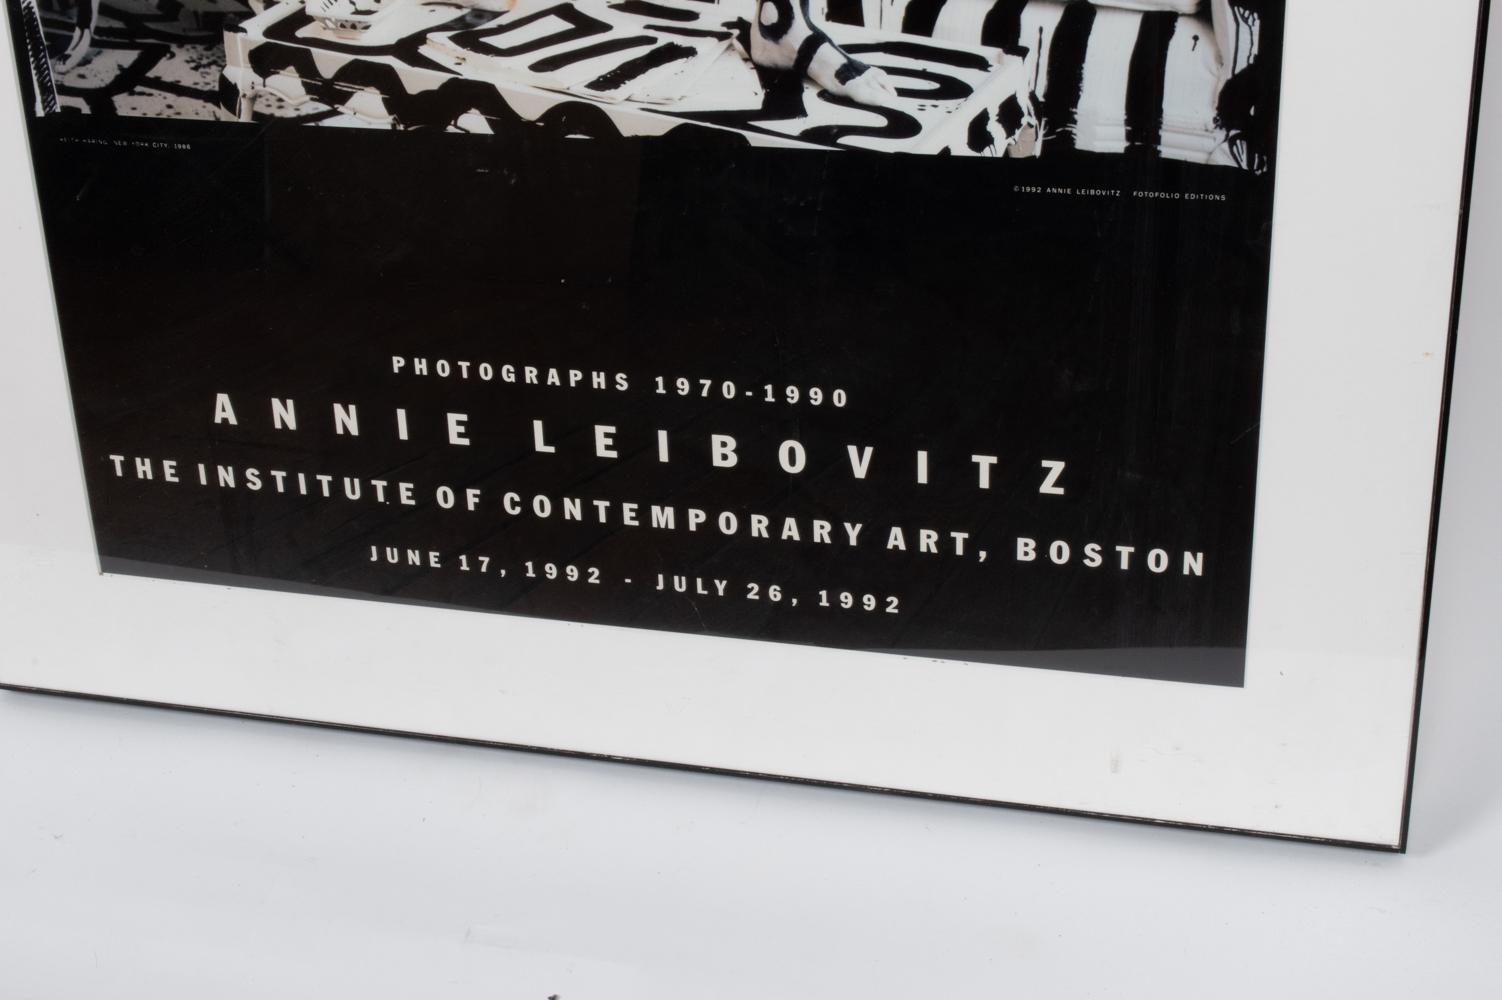 Fin du 20e siècle Annie Leibovitz, affiche de l'exposition ICA de Boston de 1992, Keith Haring